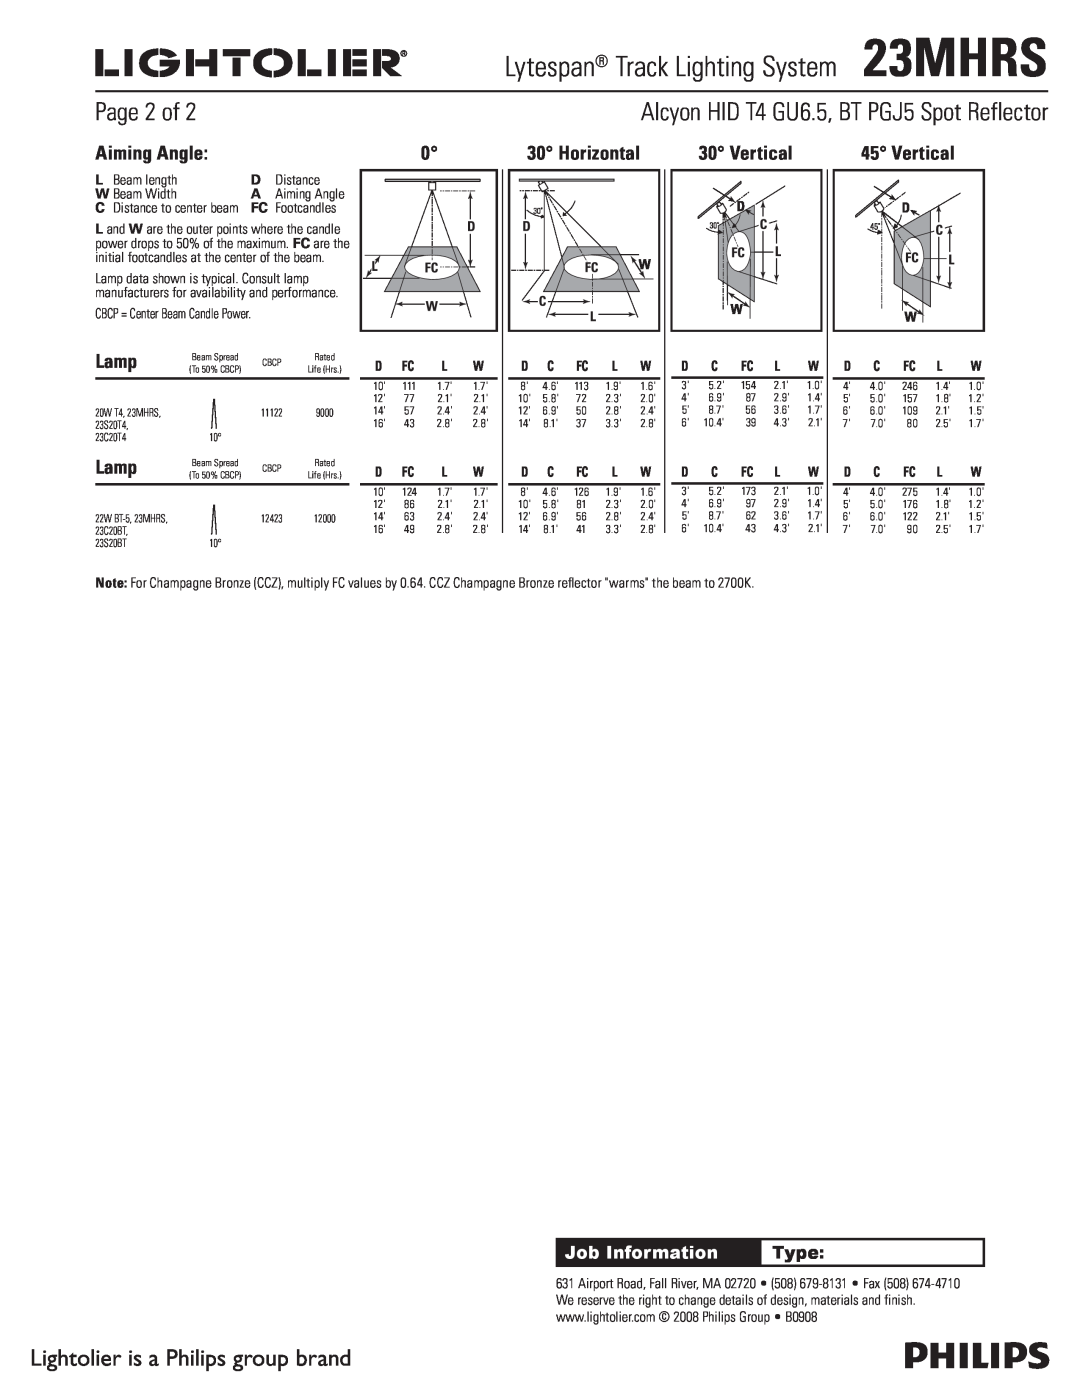 Lightolier Page 2 of, Aiming Angle, Lamp, Horizontal, Vertical, Lytespan Track Lighting System23MHRS, Job Information 